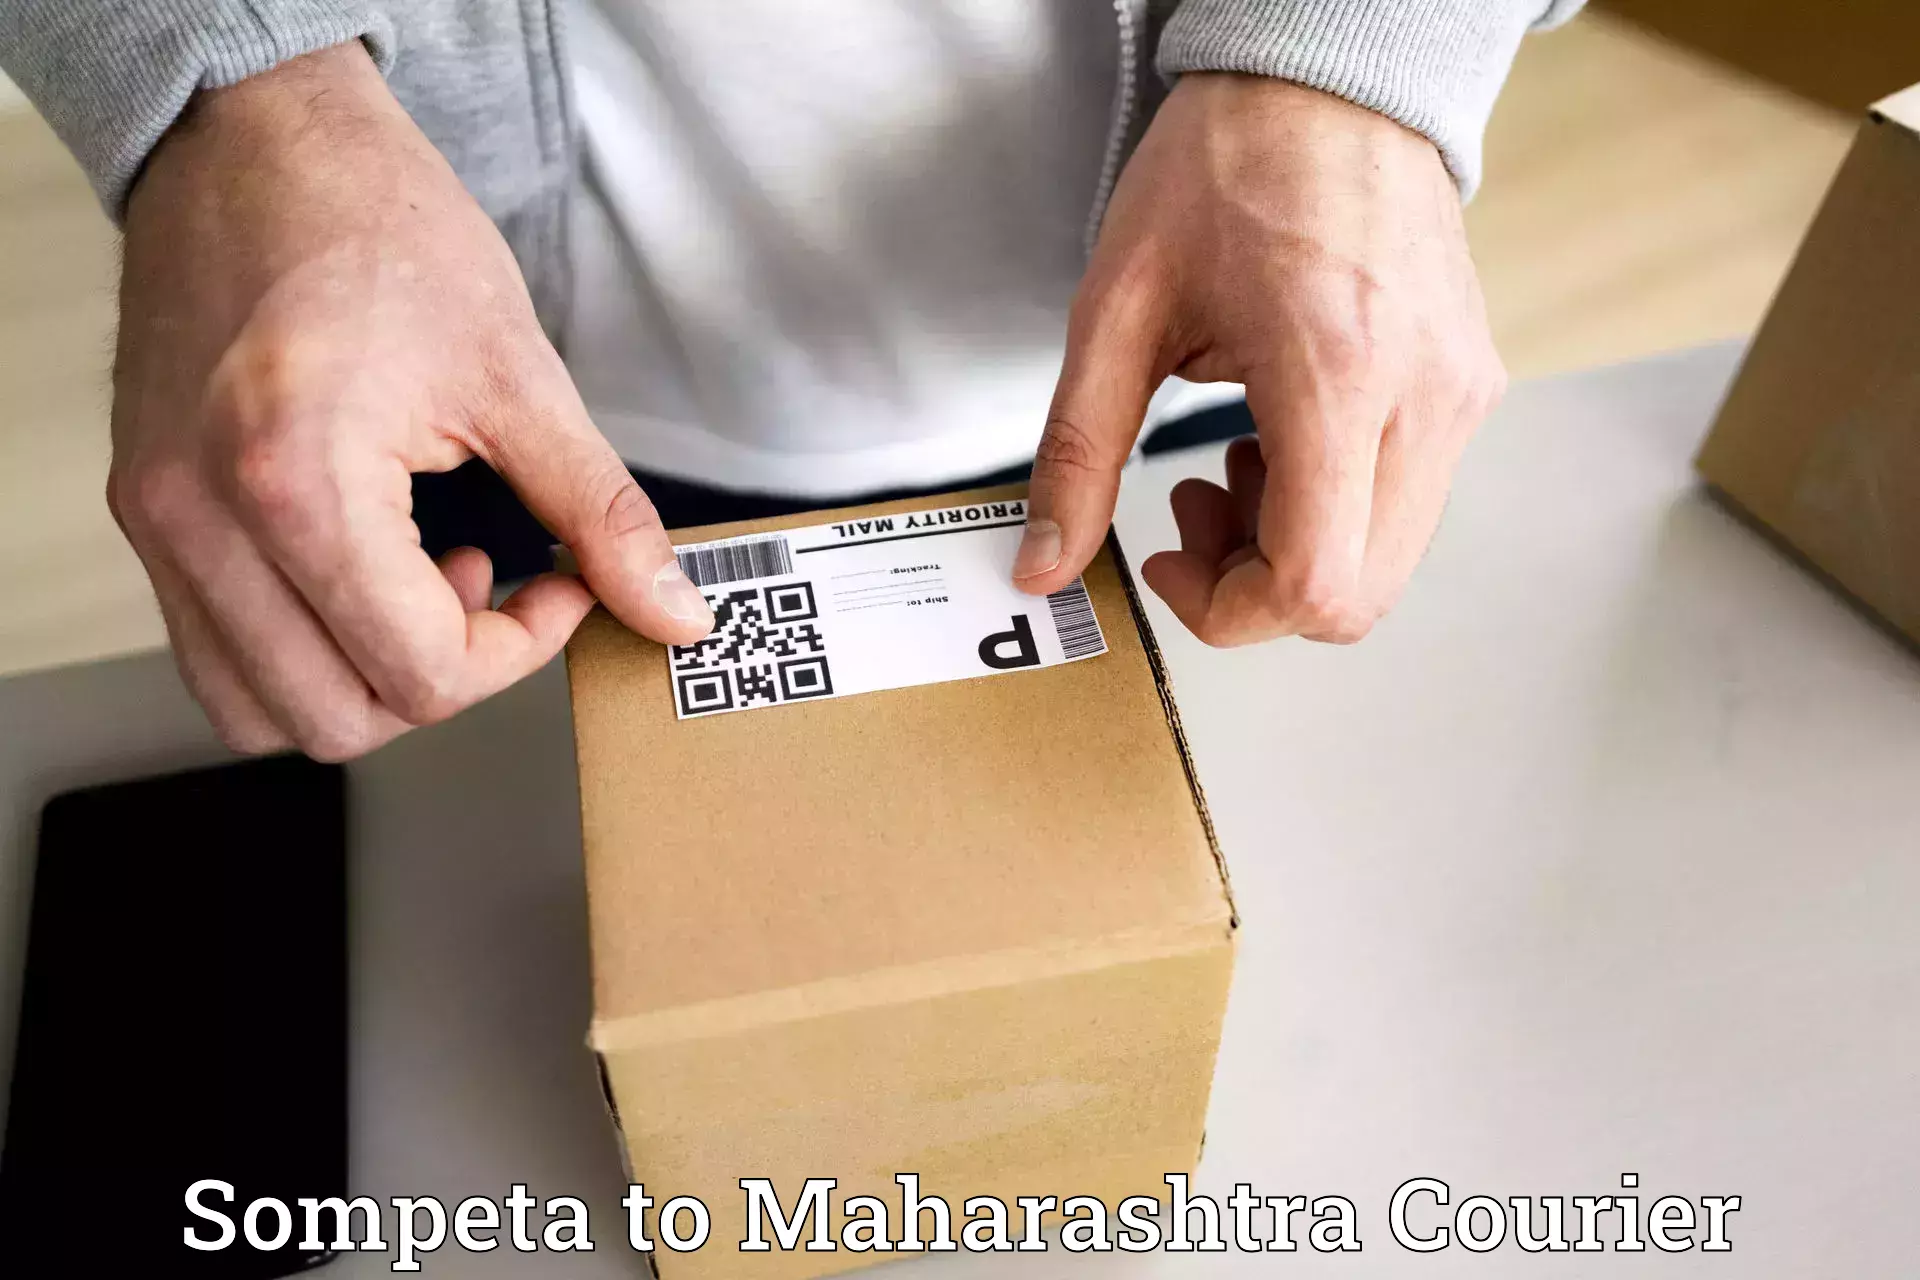 Nationwide delivery network Sompeta to Borivali